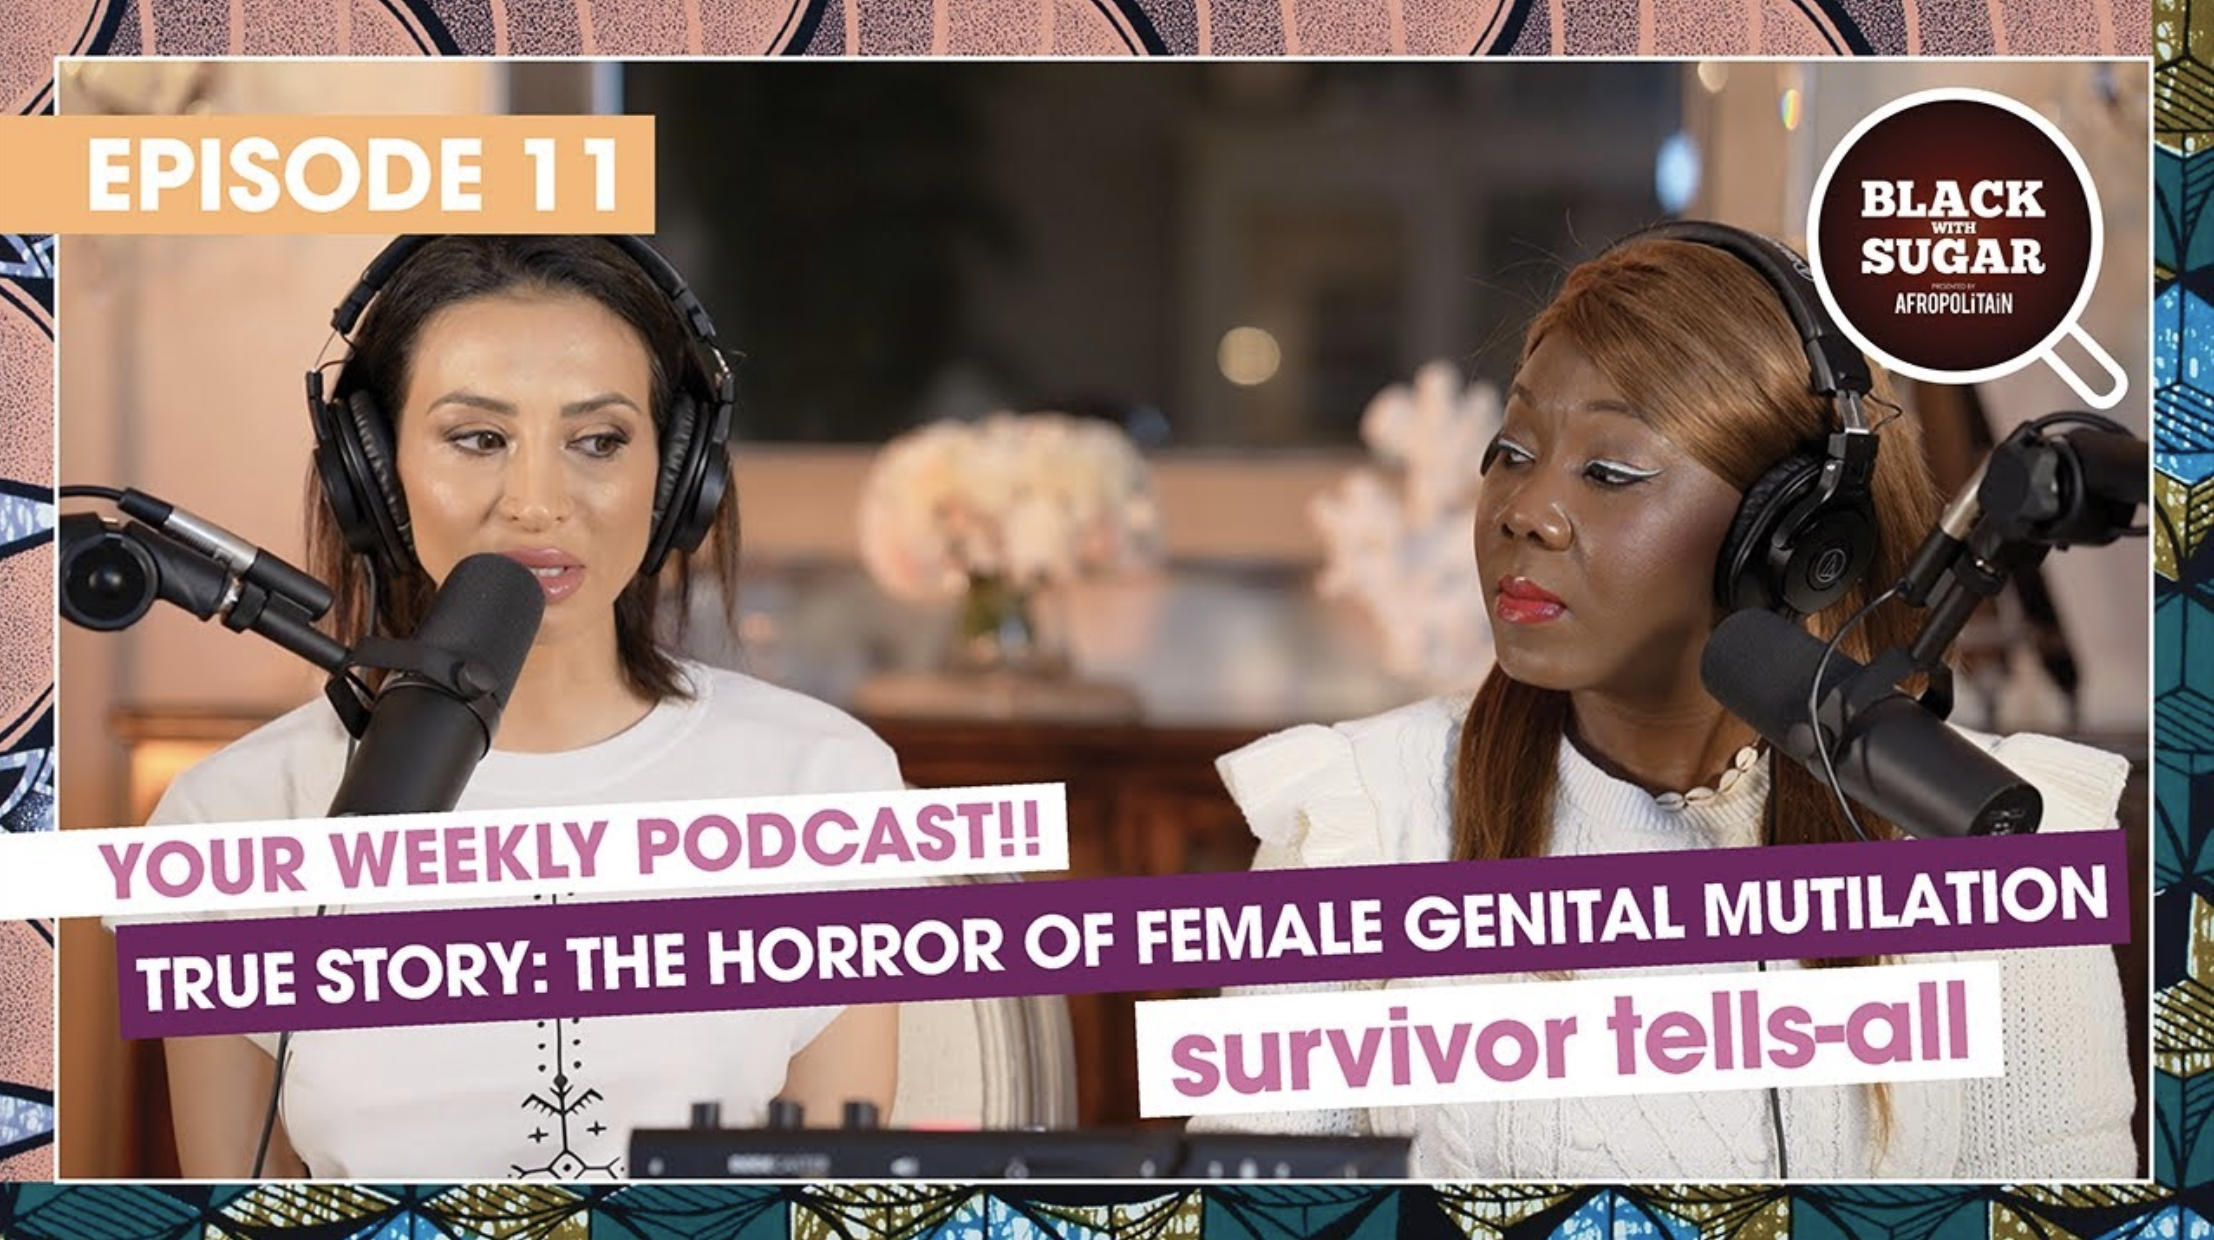 True story! The horror of female genital mutilation, survivor tells-all! Black with Sugar Podcast 11